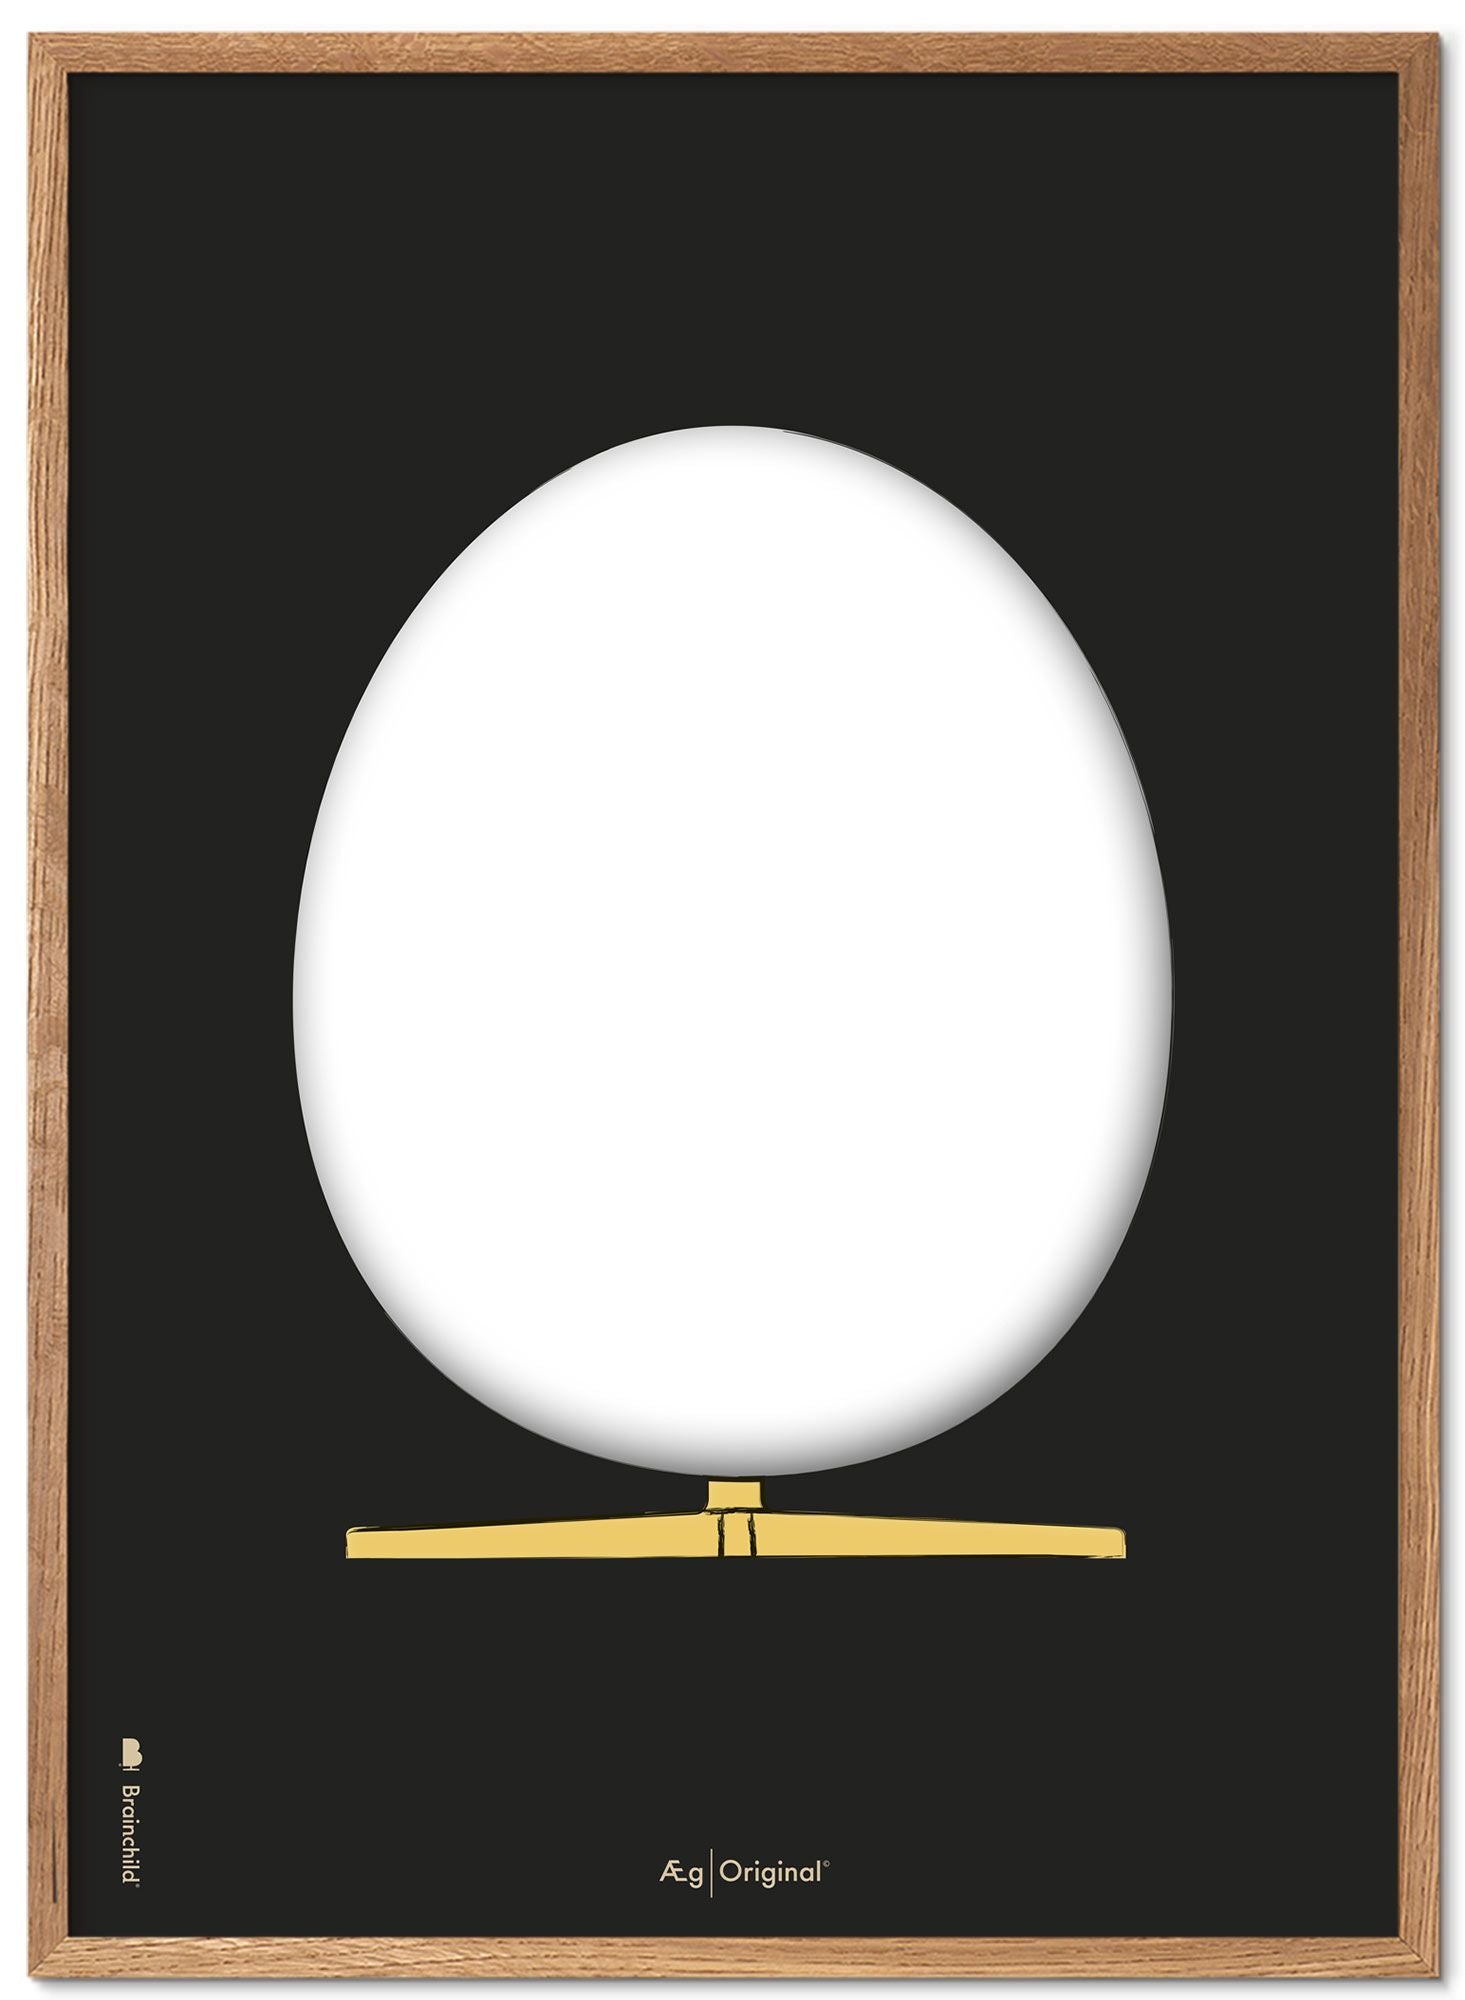 Brainchild The Egg Design Sketch Poster Frame Made Of Light Wood 30x40 Cm, Black Background